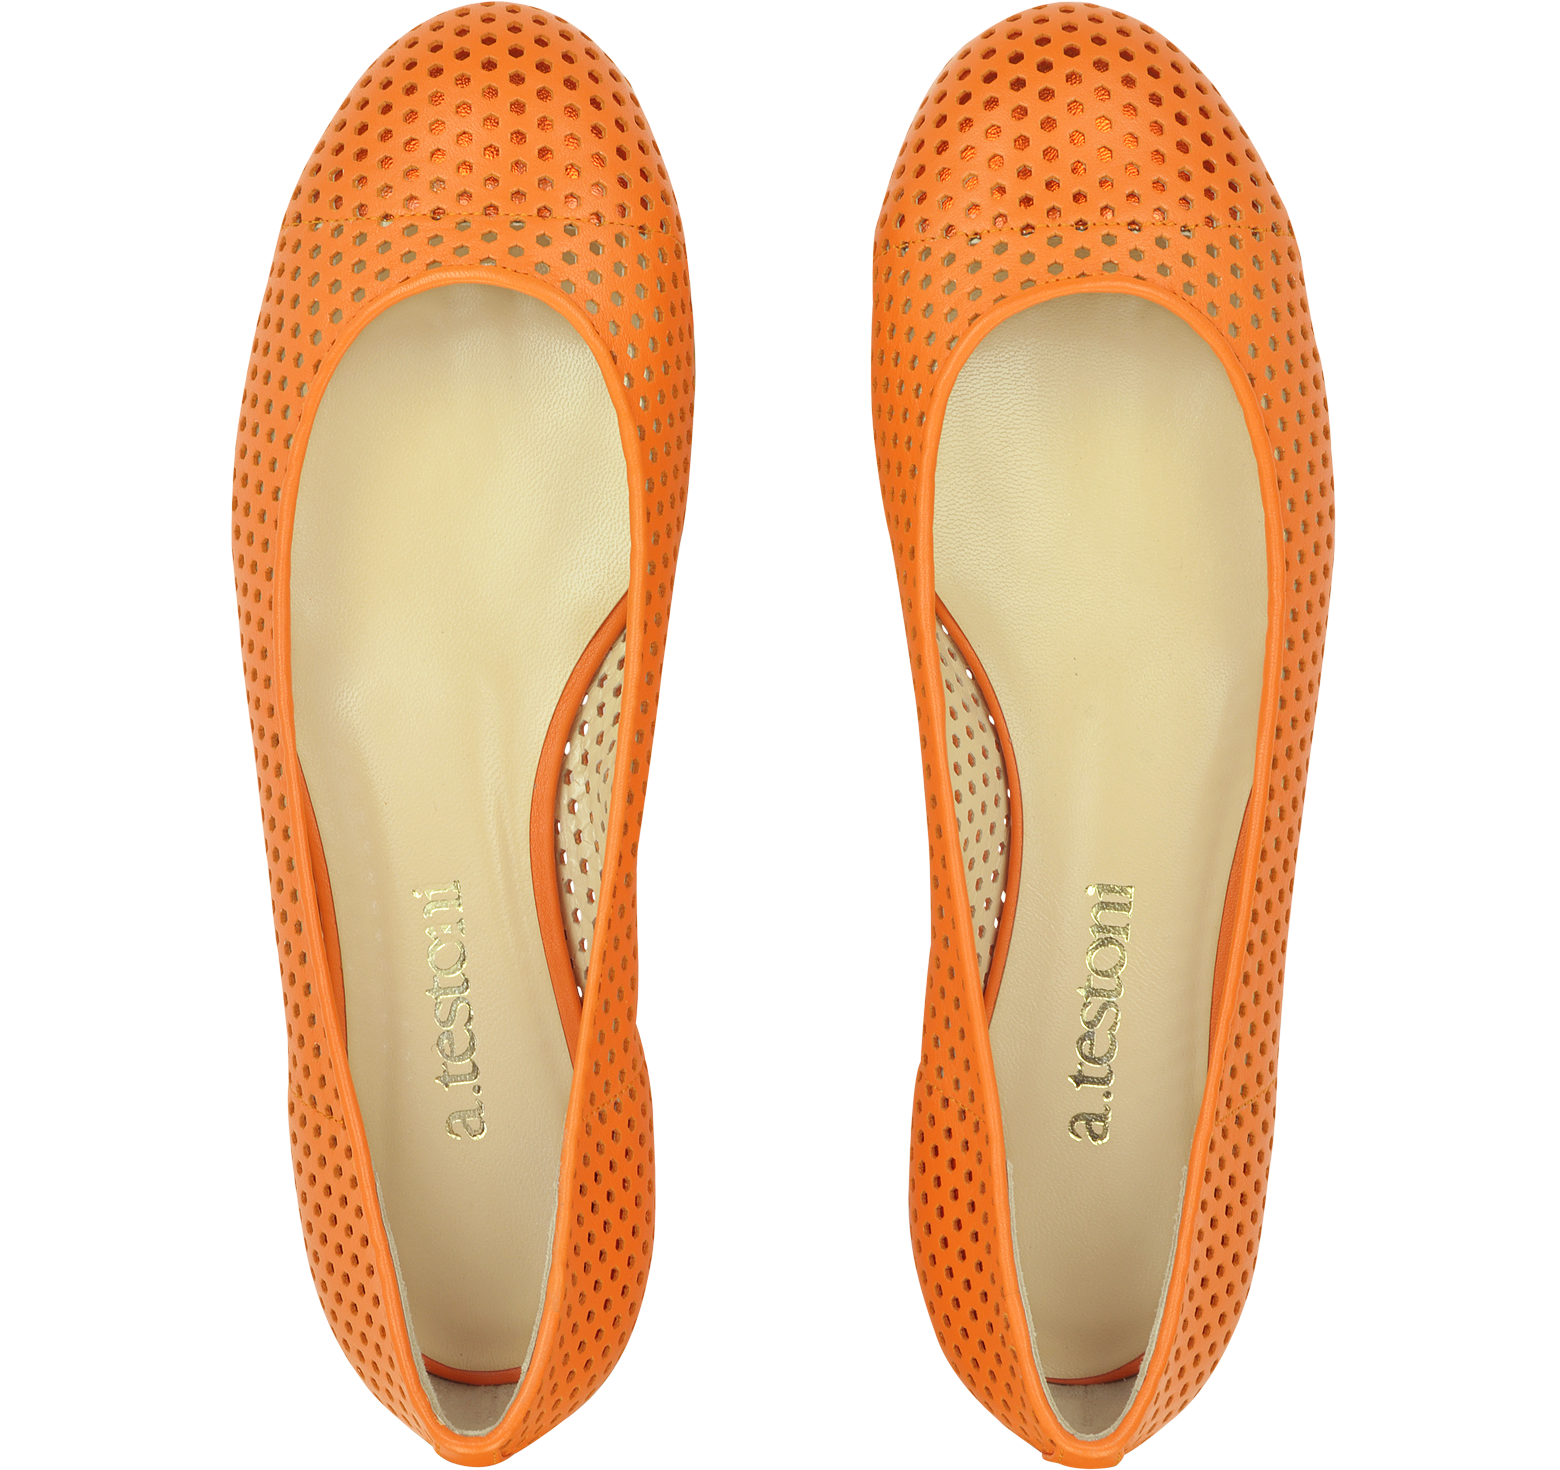 orange ballerina shoes